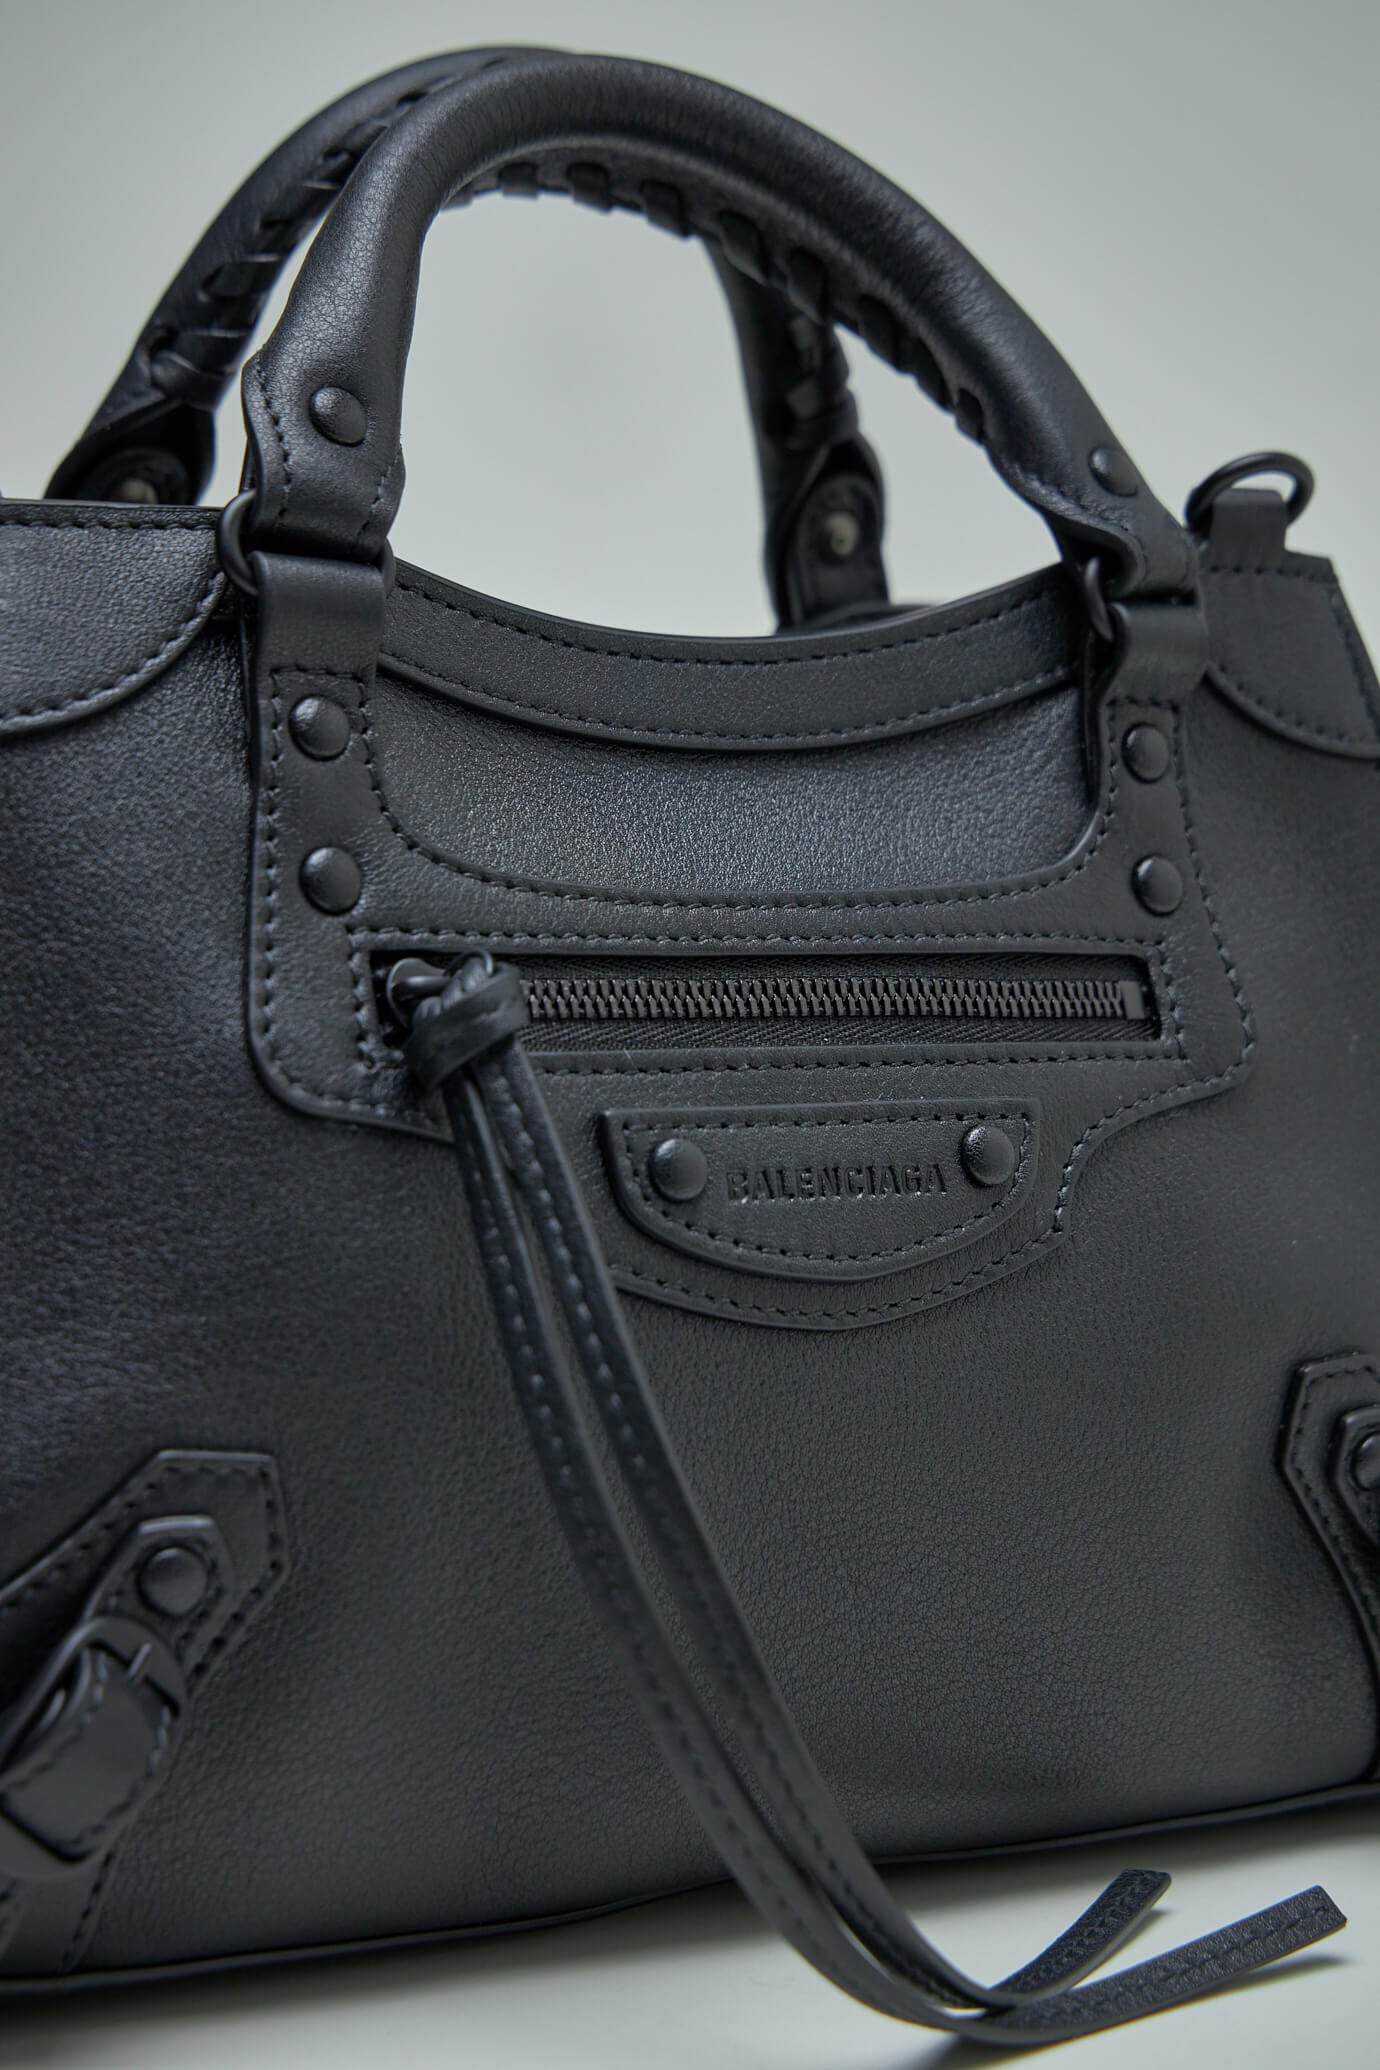 Women's Neo Classic Xs Handbag in Black